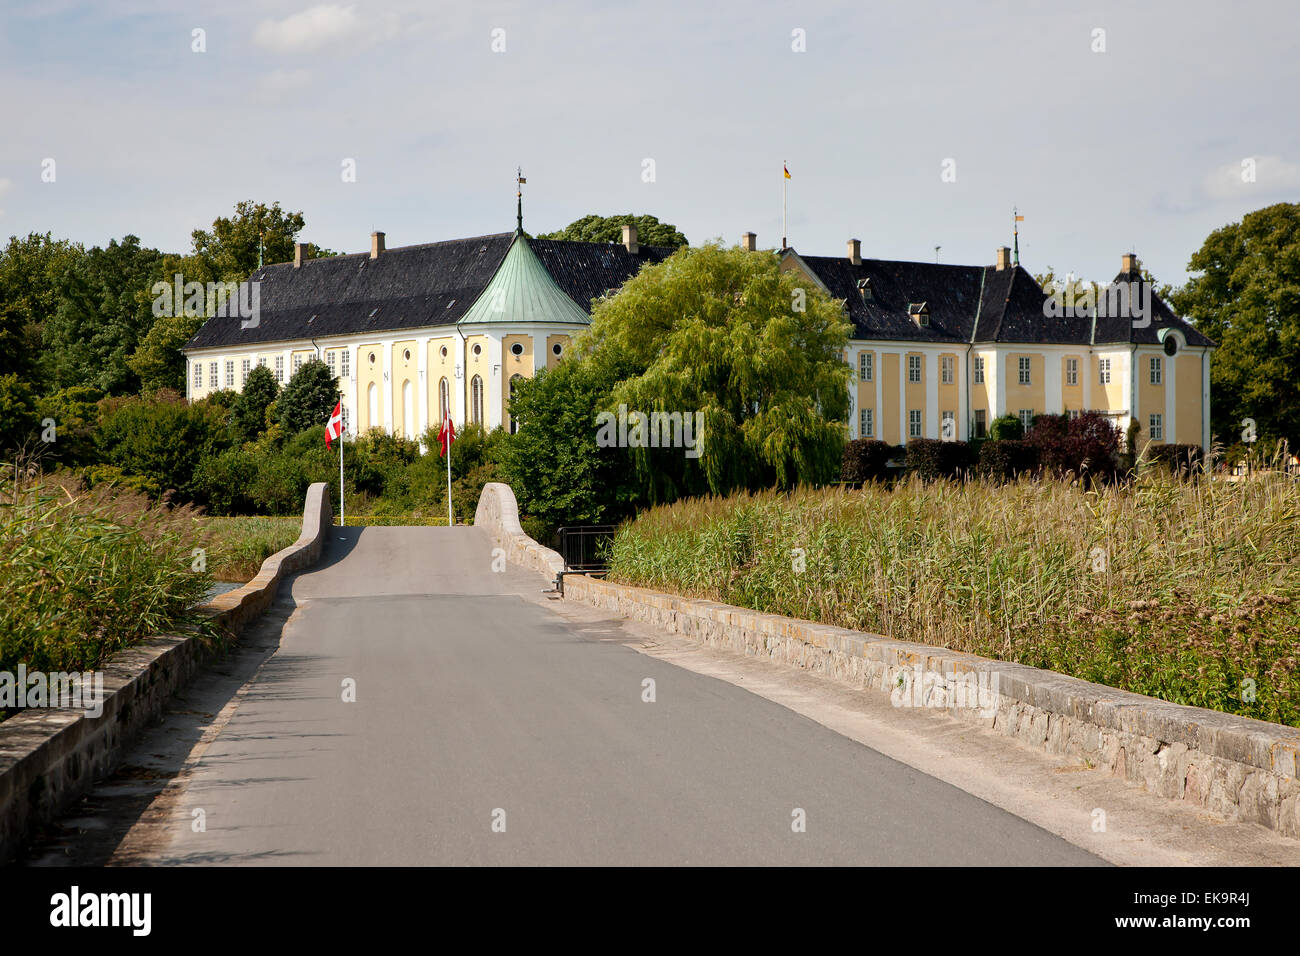 The fairytale Gavnoe castle in Denmark Stock Photo